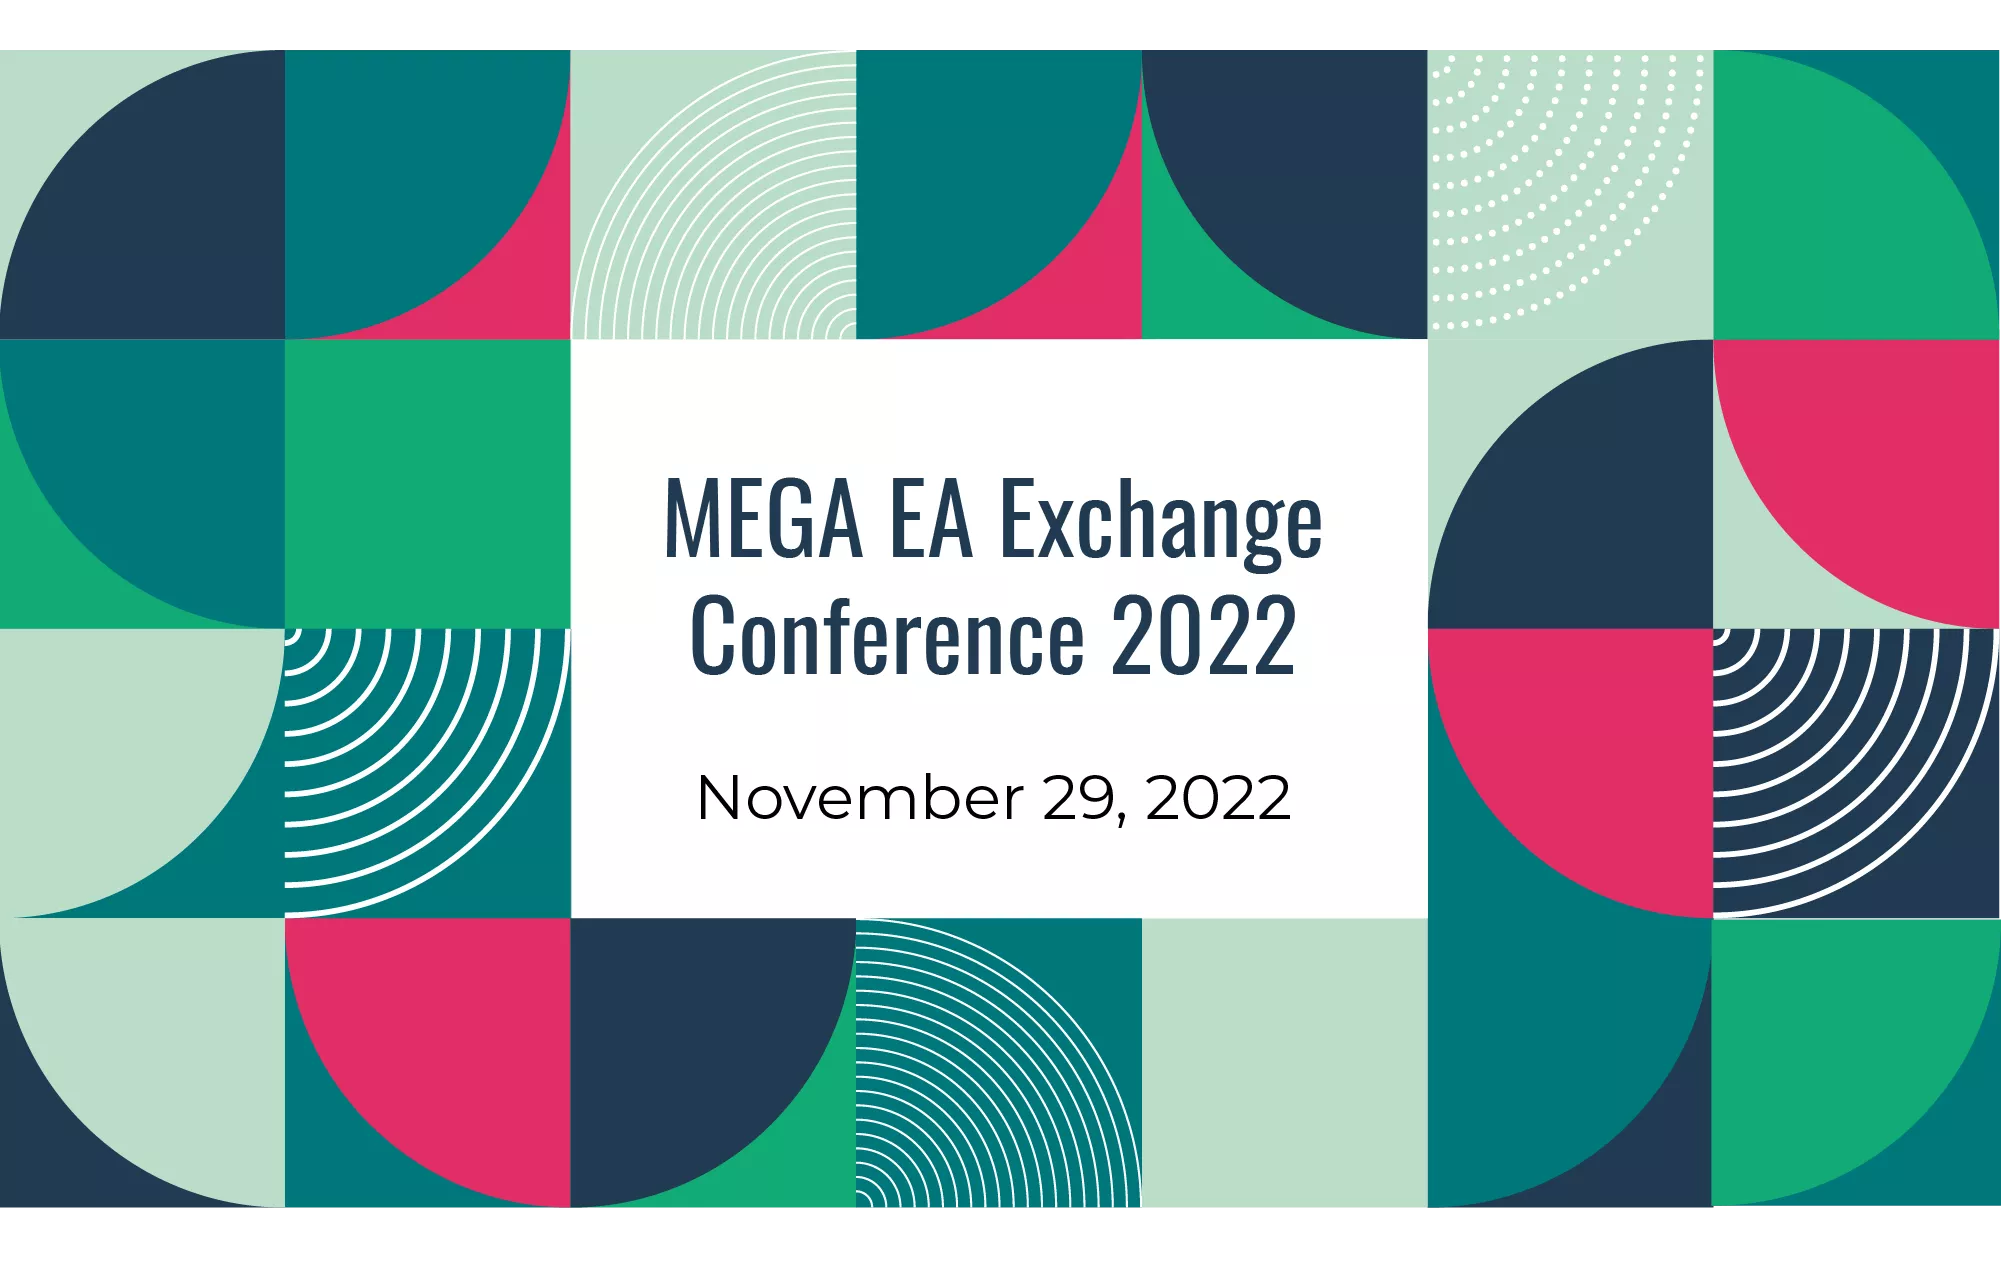 MEGA EA Exchange Conference 2022 Enterprise architecture and business transformation